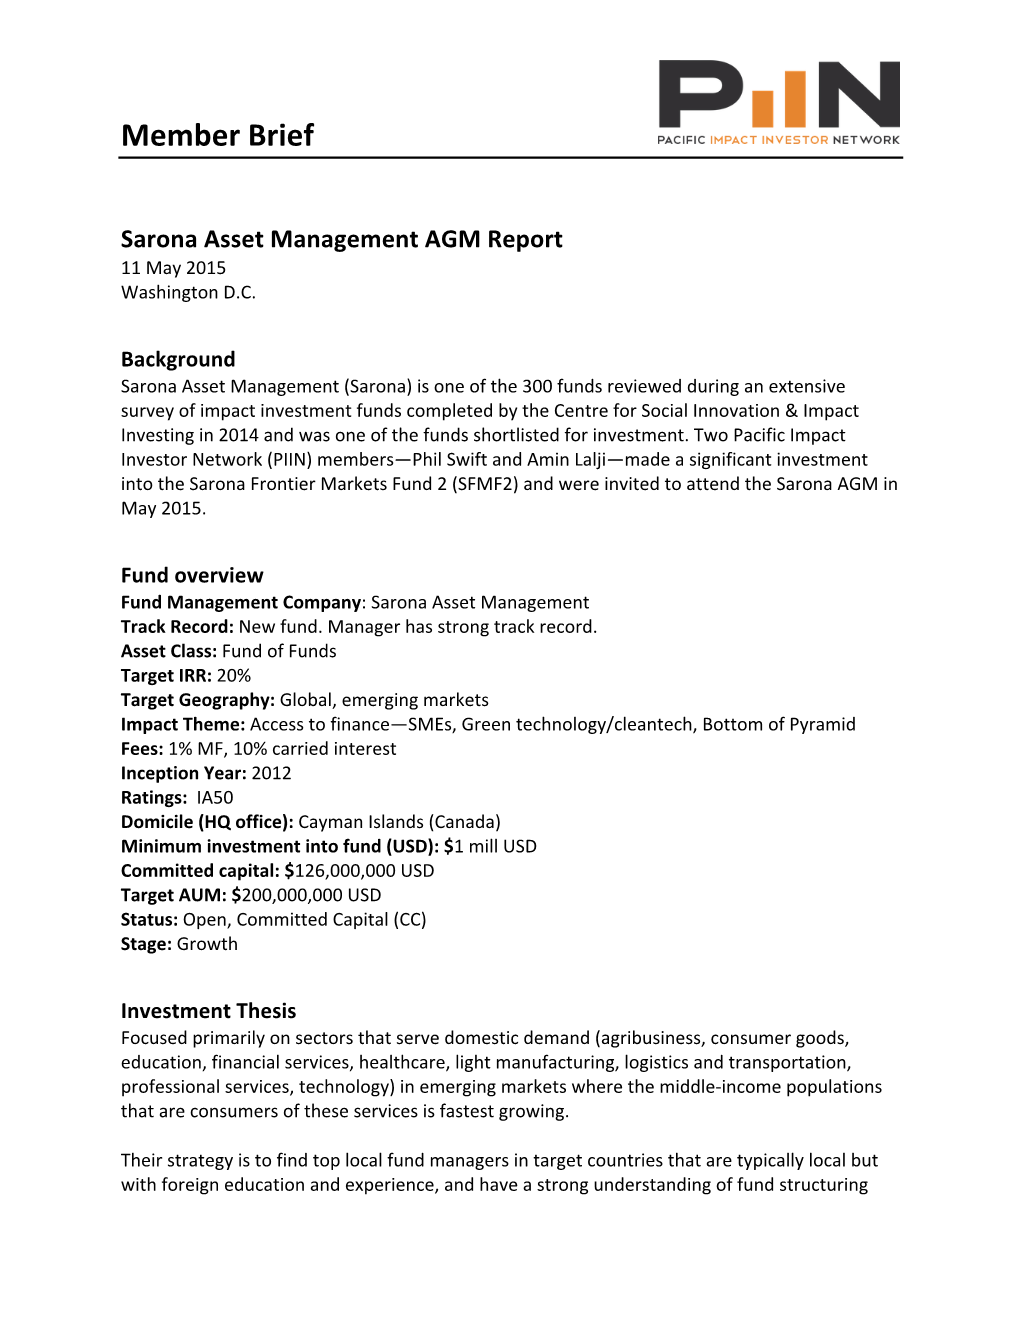 Member Brief Sarona Asset Management AGM